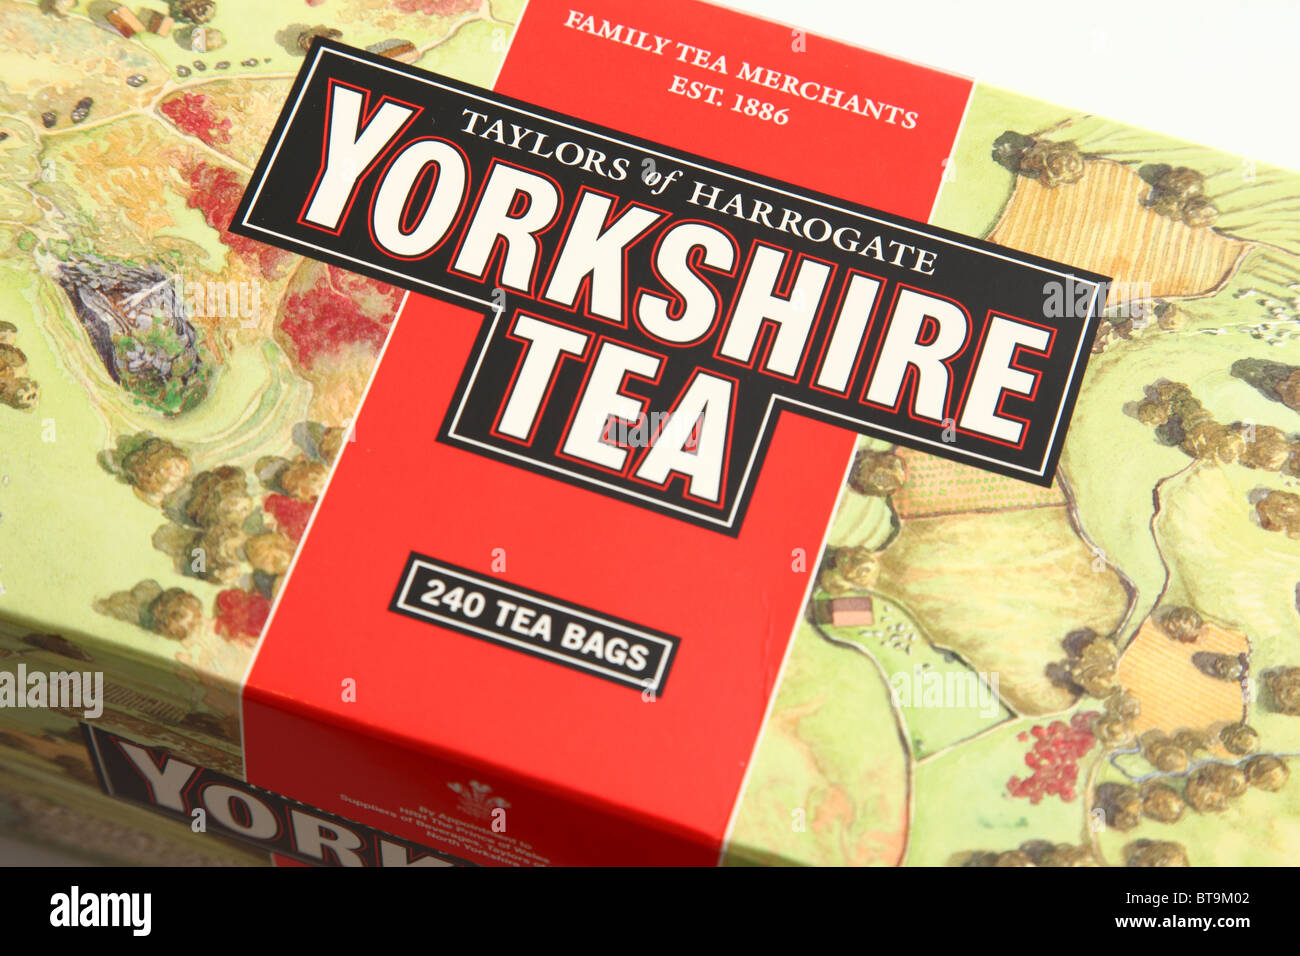 Yorkshire Tea 240 Tea Bags By Taylors of Harrogate